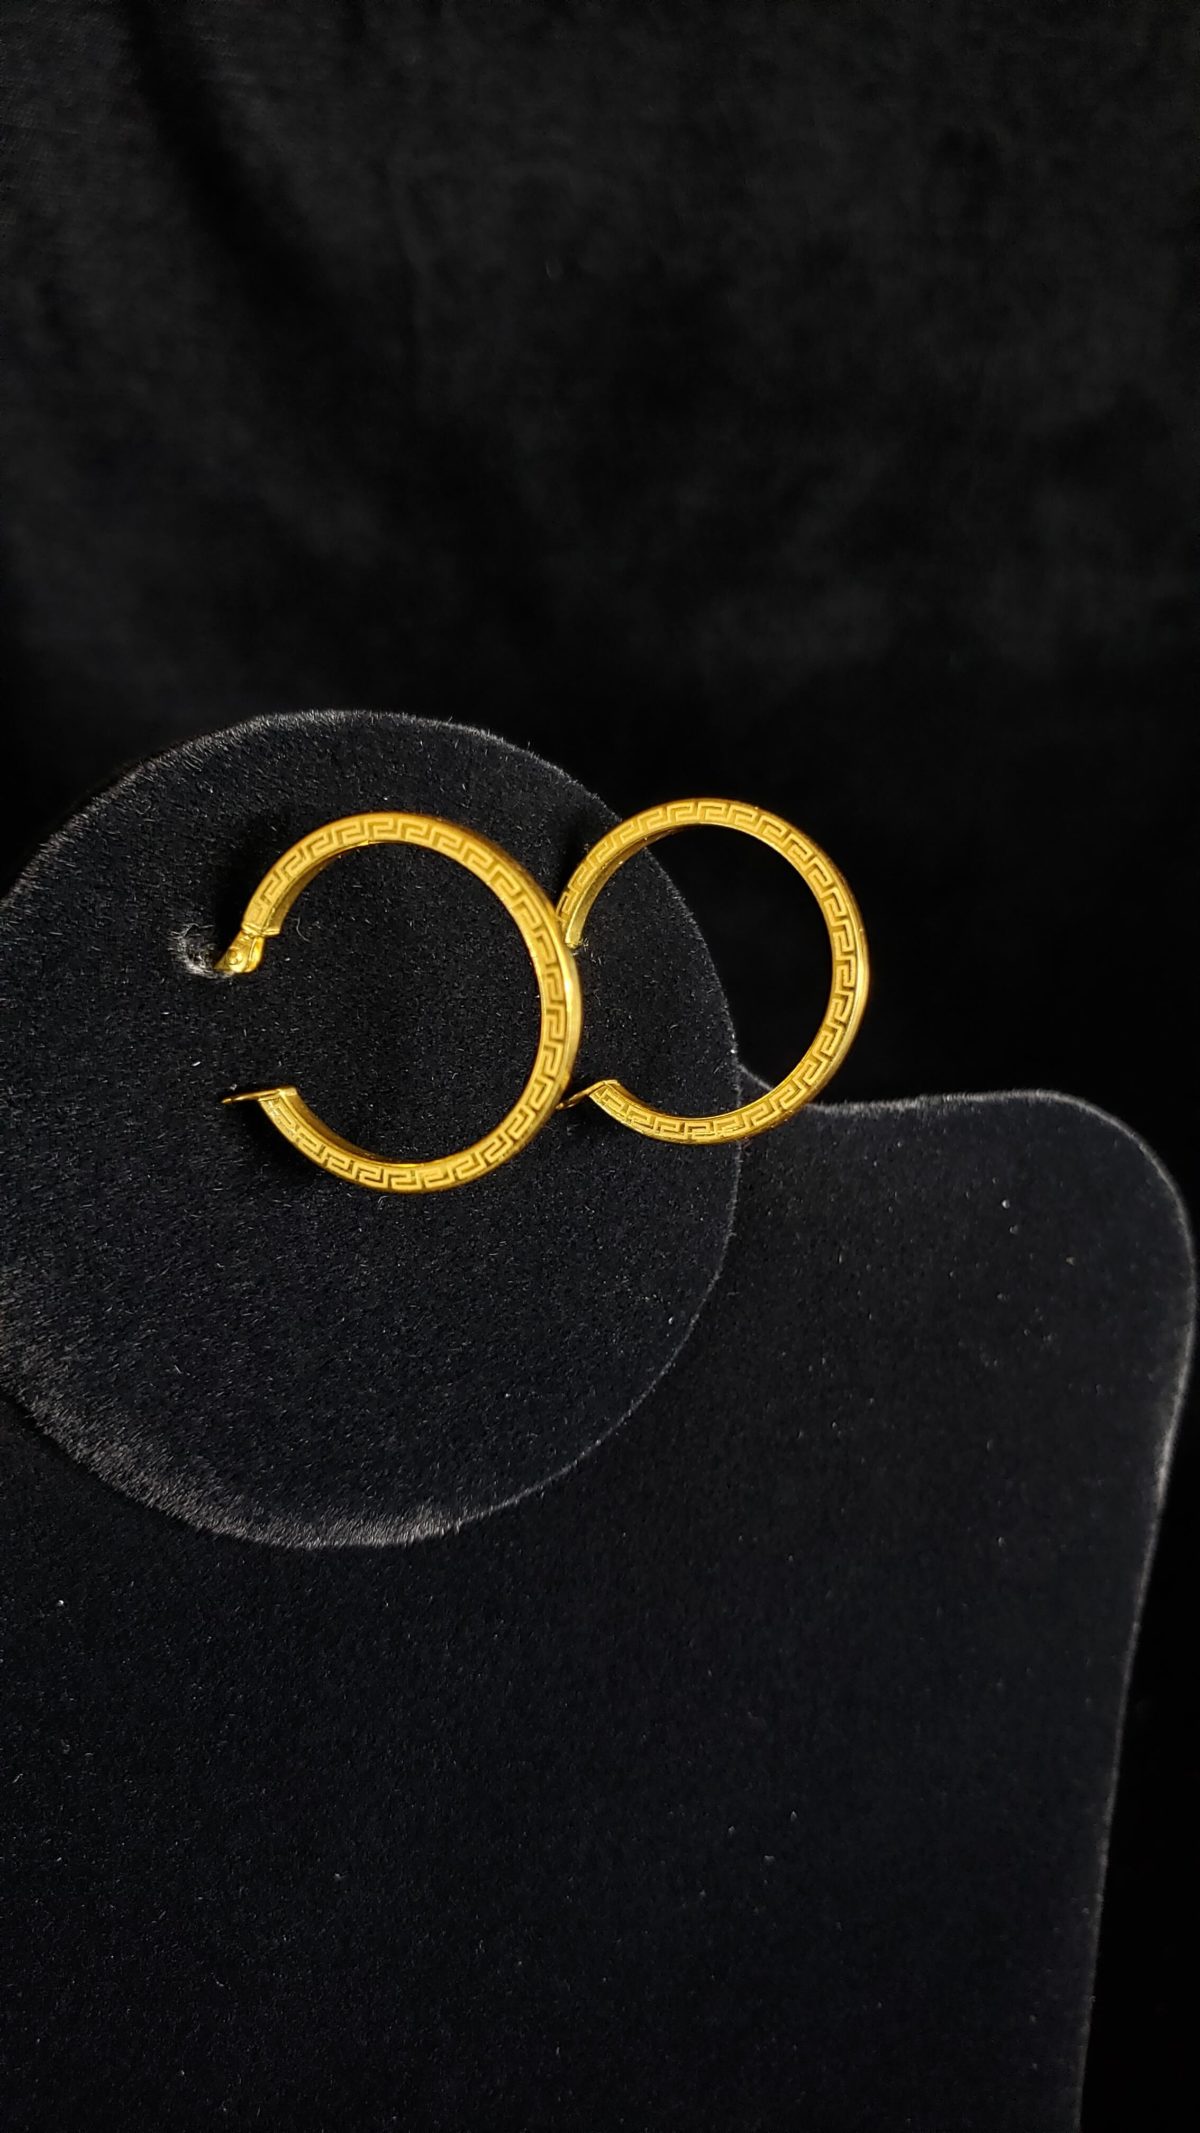 Leena's-Gold-earrings